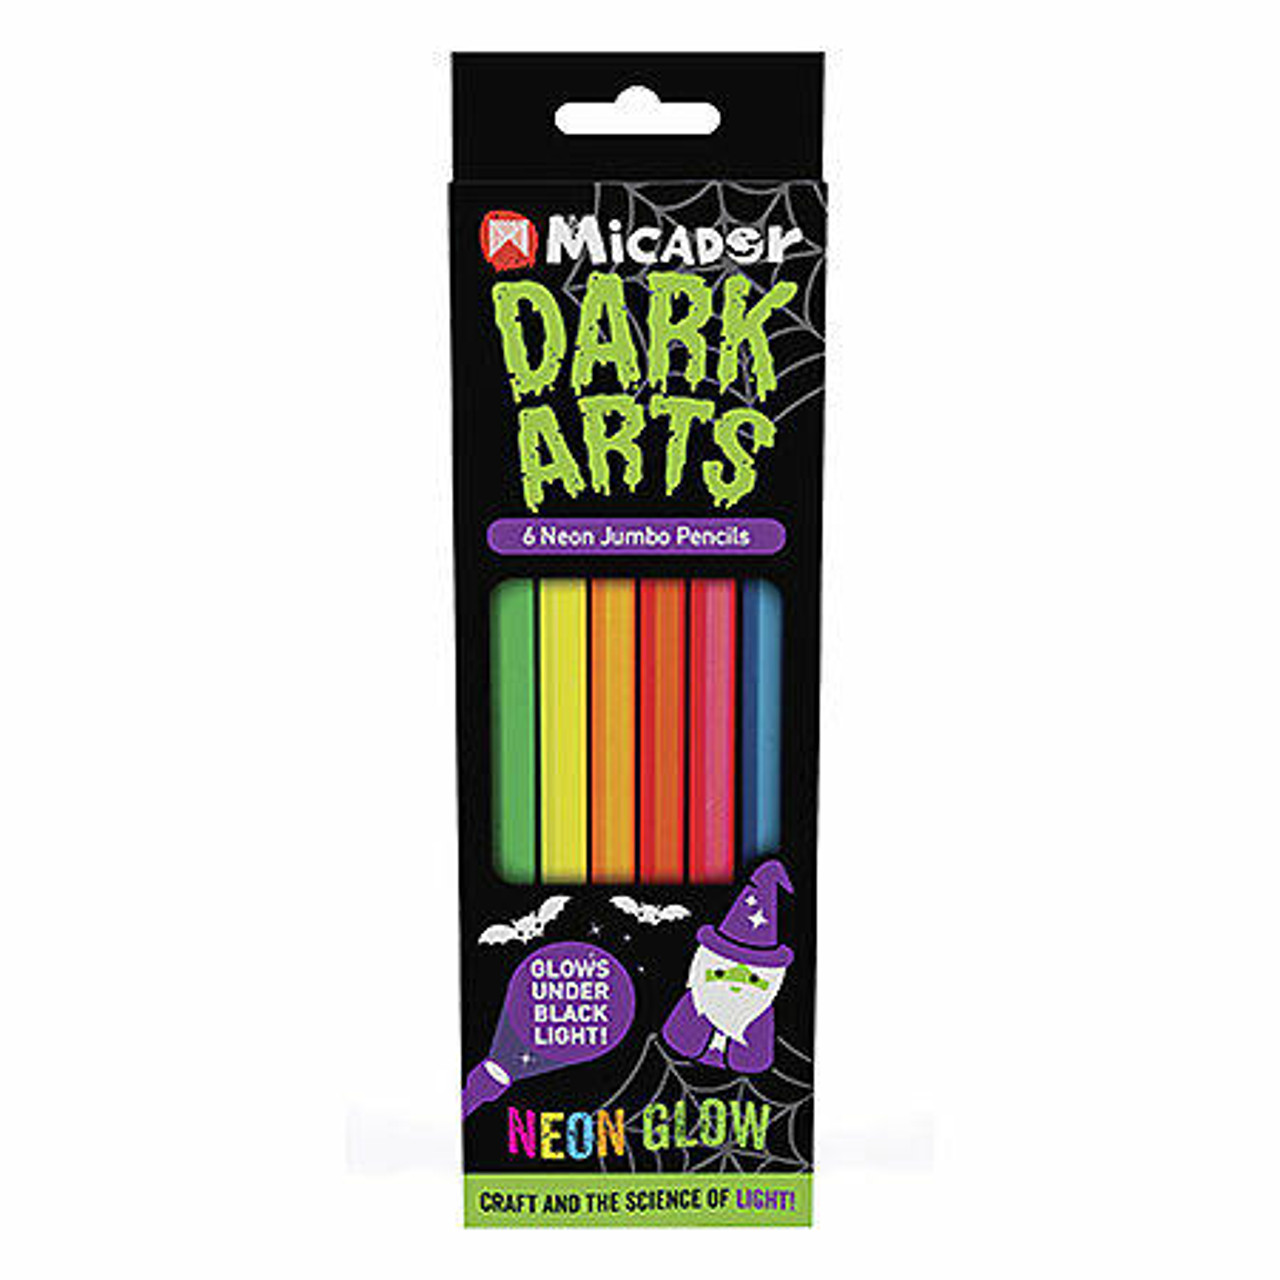 Pentel Arts Orenz Deluxe Drafting Pencils (2-Pack), Pencils